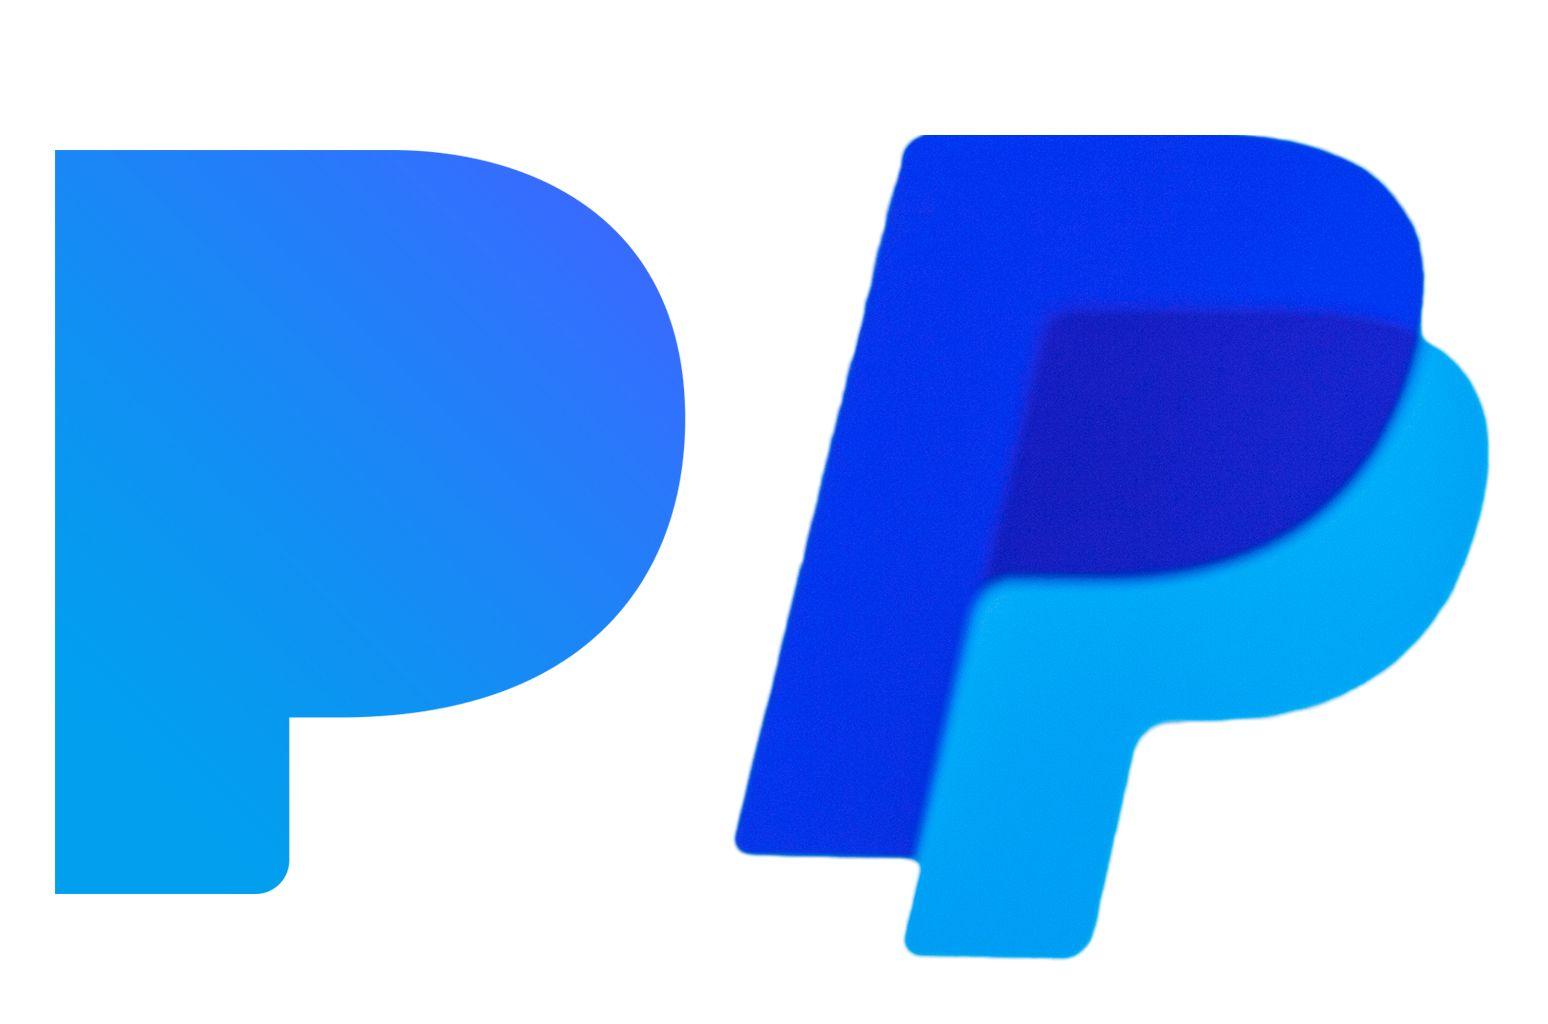 Two P Logo - Two blue p Logos